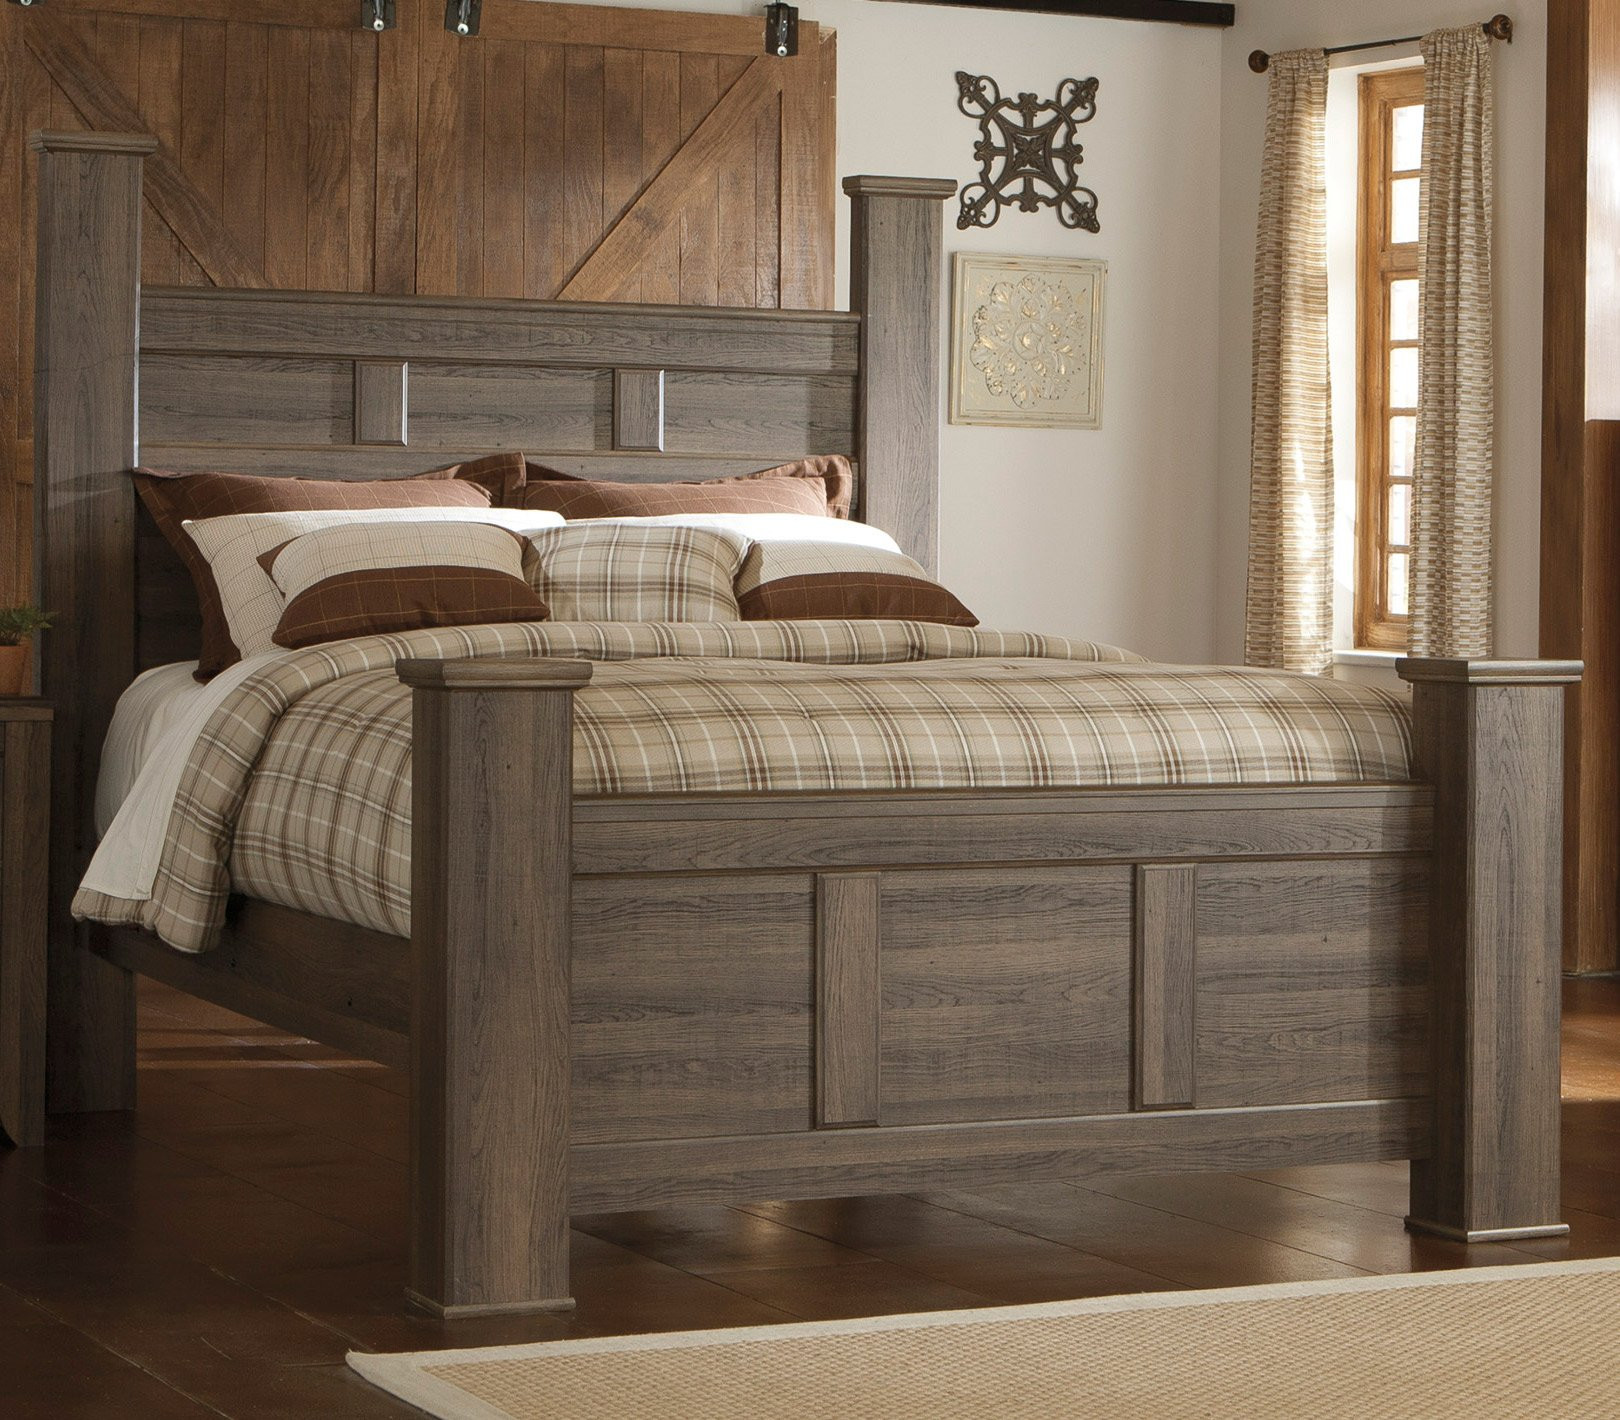 Rustic King Size Bedroom Sets
 Driftwood Rustic Modern 6 Piece King Bedroom Set Fairfax